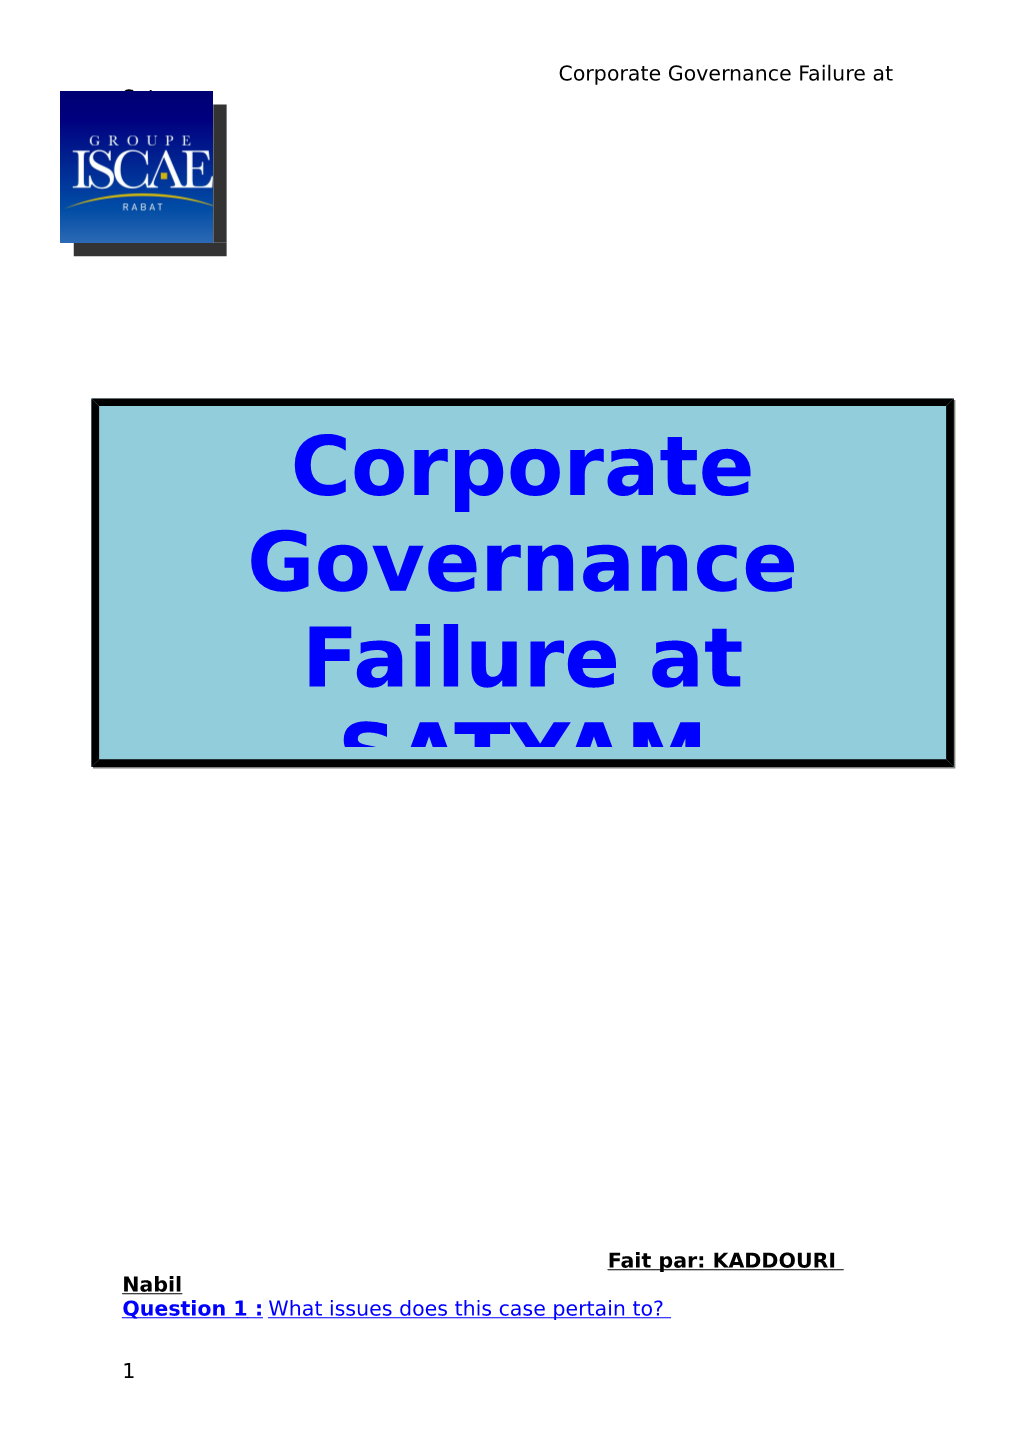 Corporate Governance Failure at Satyam